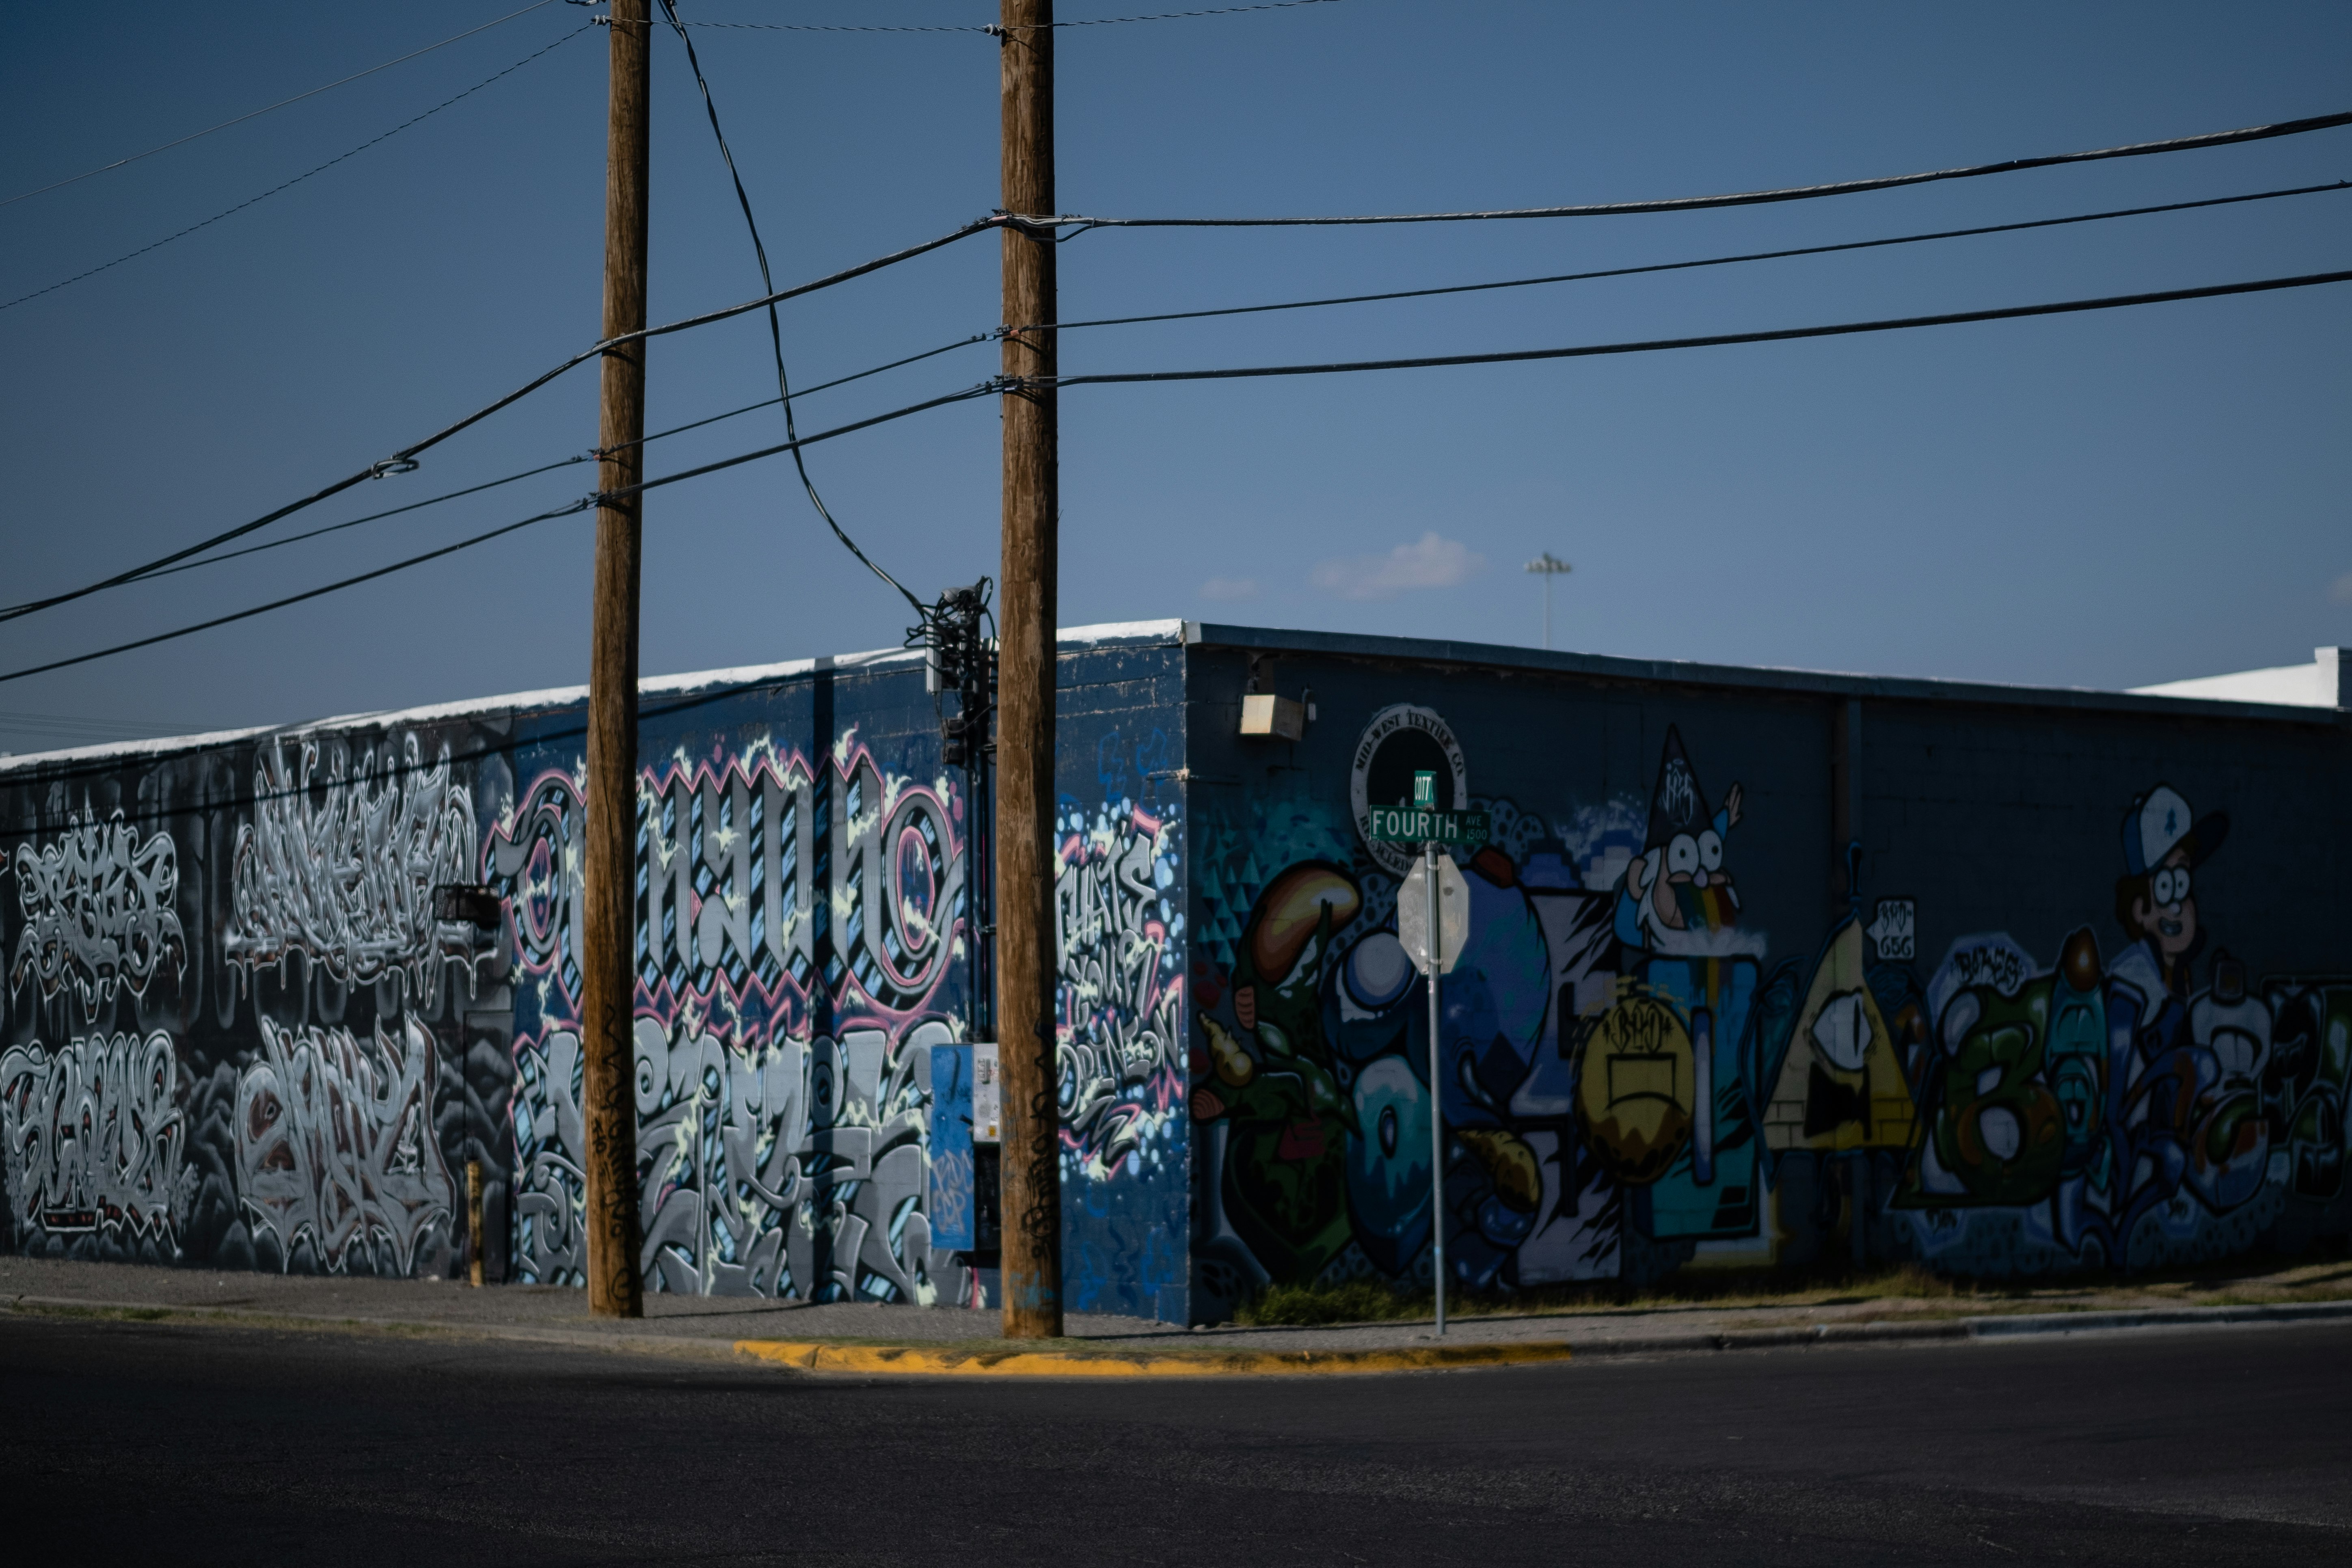 graffiti on wall during daytime